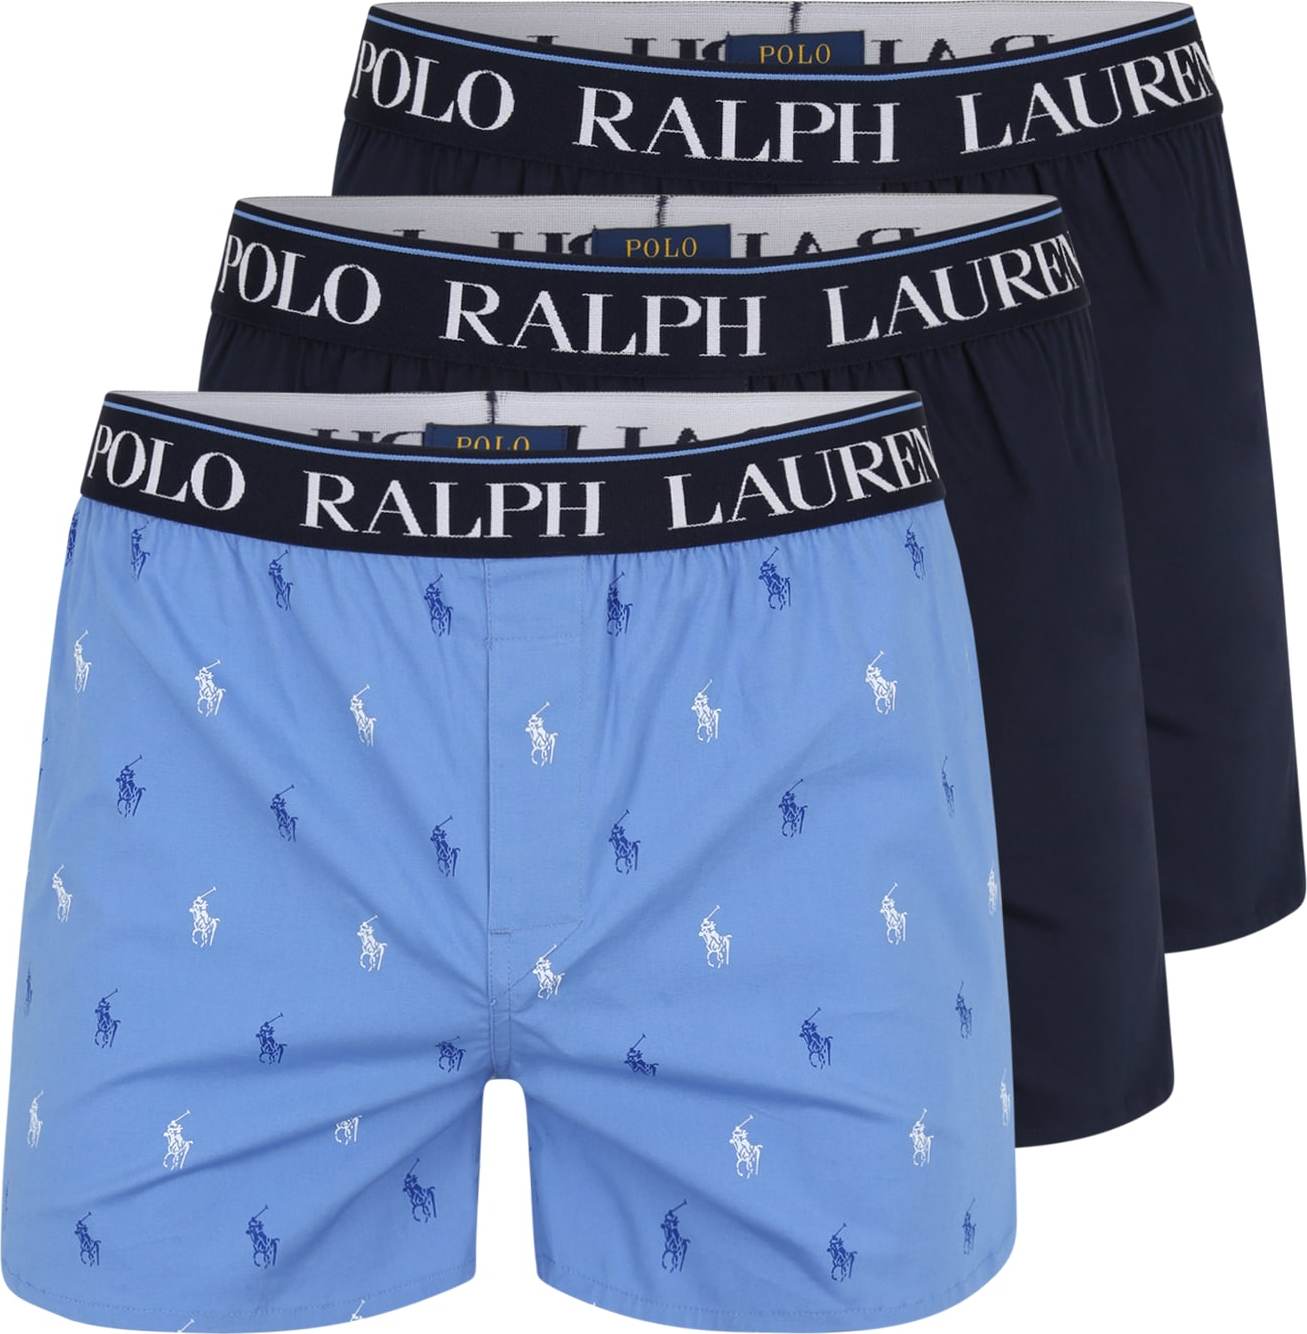 Polo Ralph Lauren Boxerky modrá / námořnická modř / světlemodrá / bílá